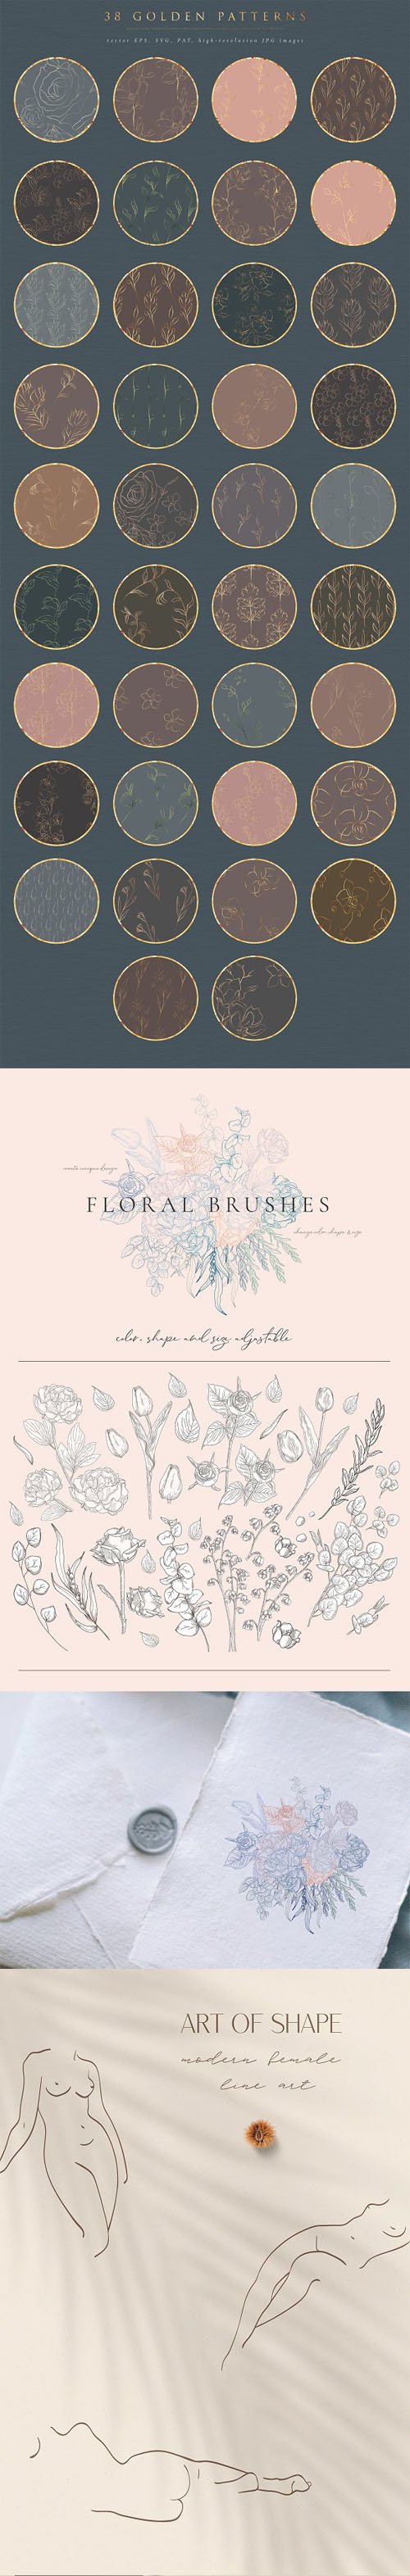 Line Art Bundle - Floral Graphic Templates - 12 Sets IN 1